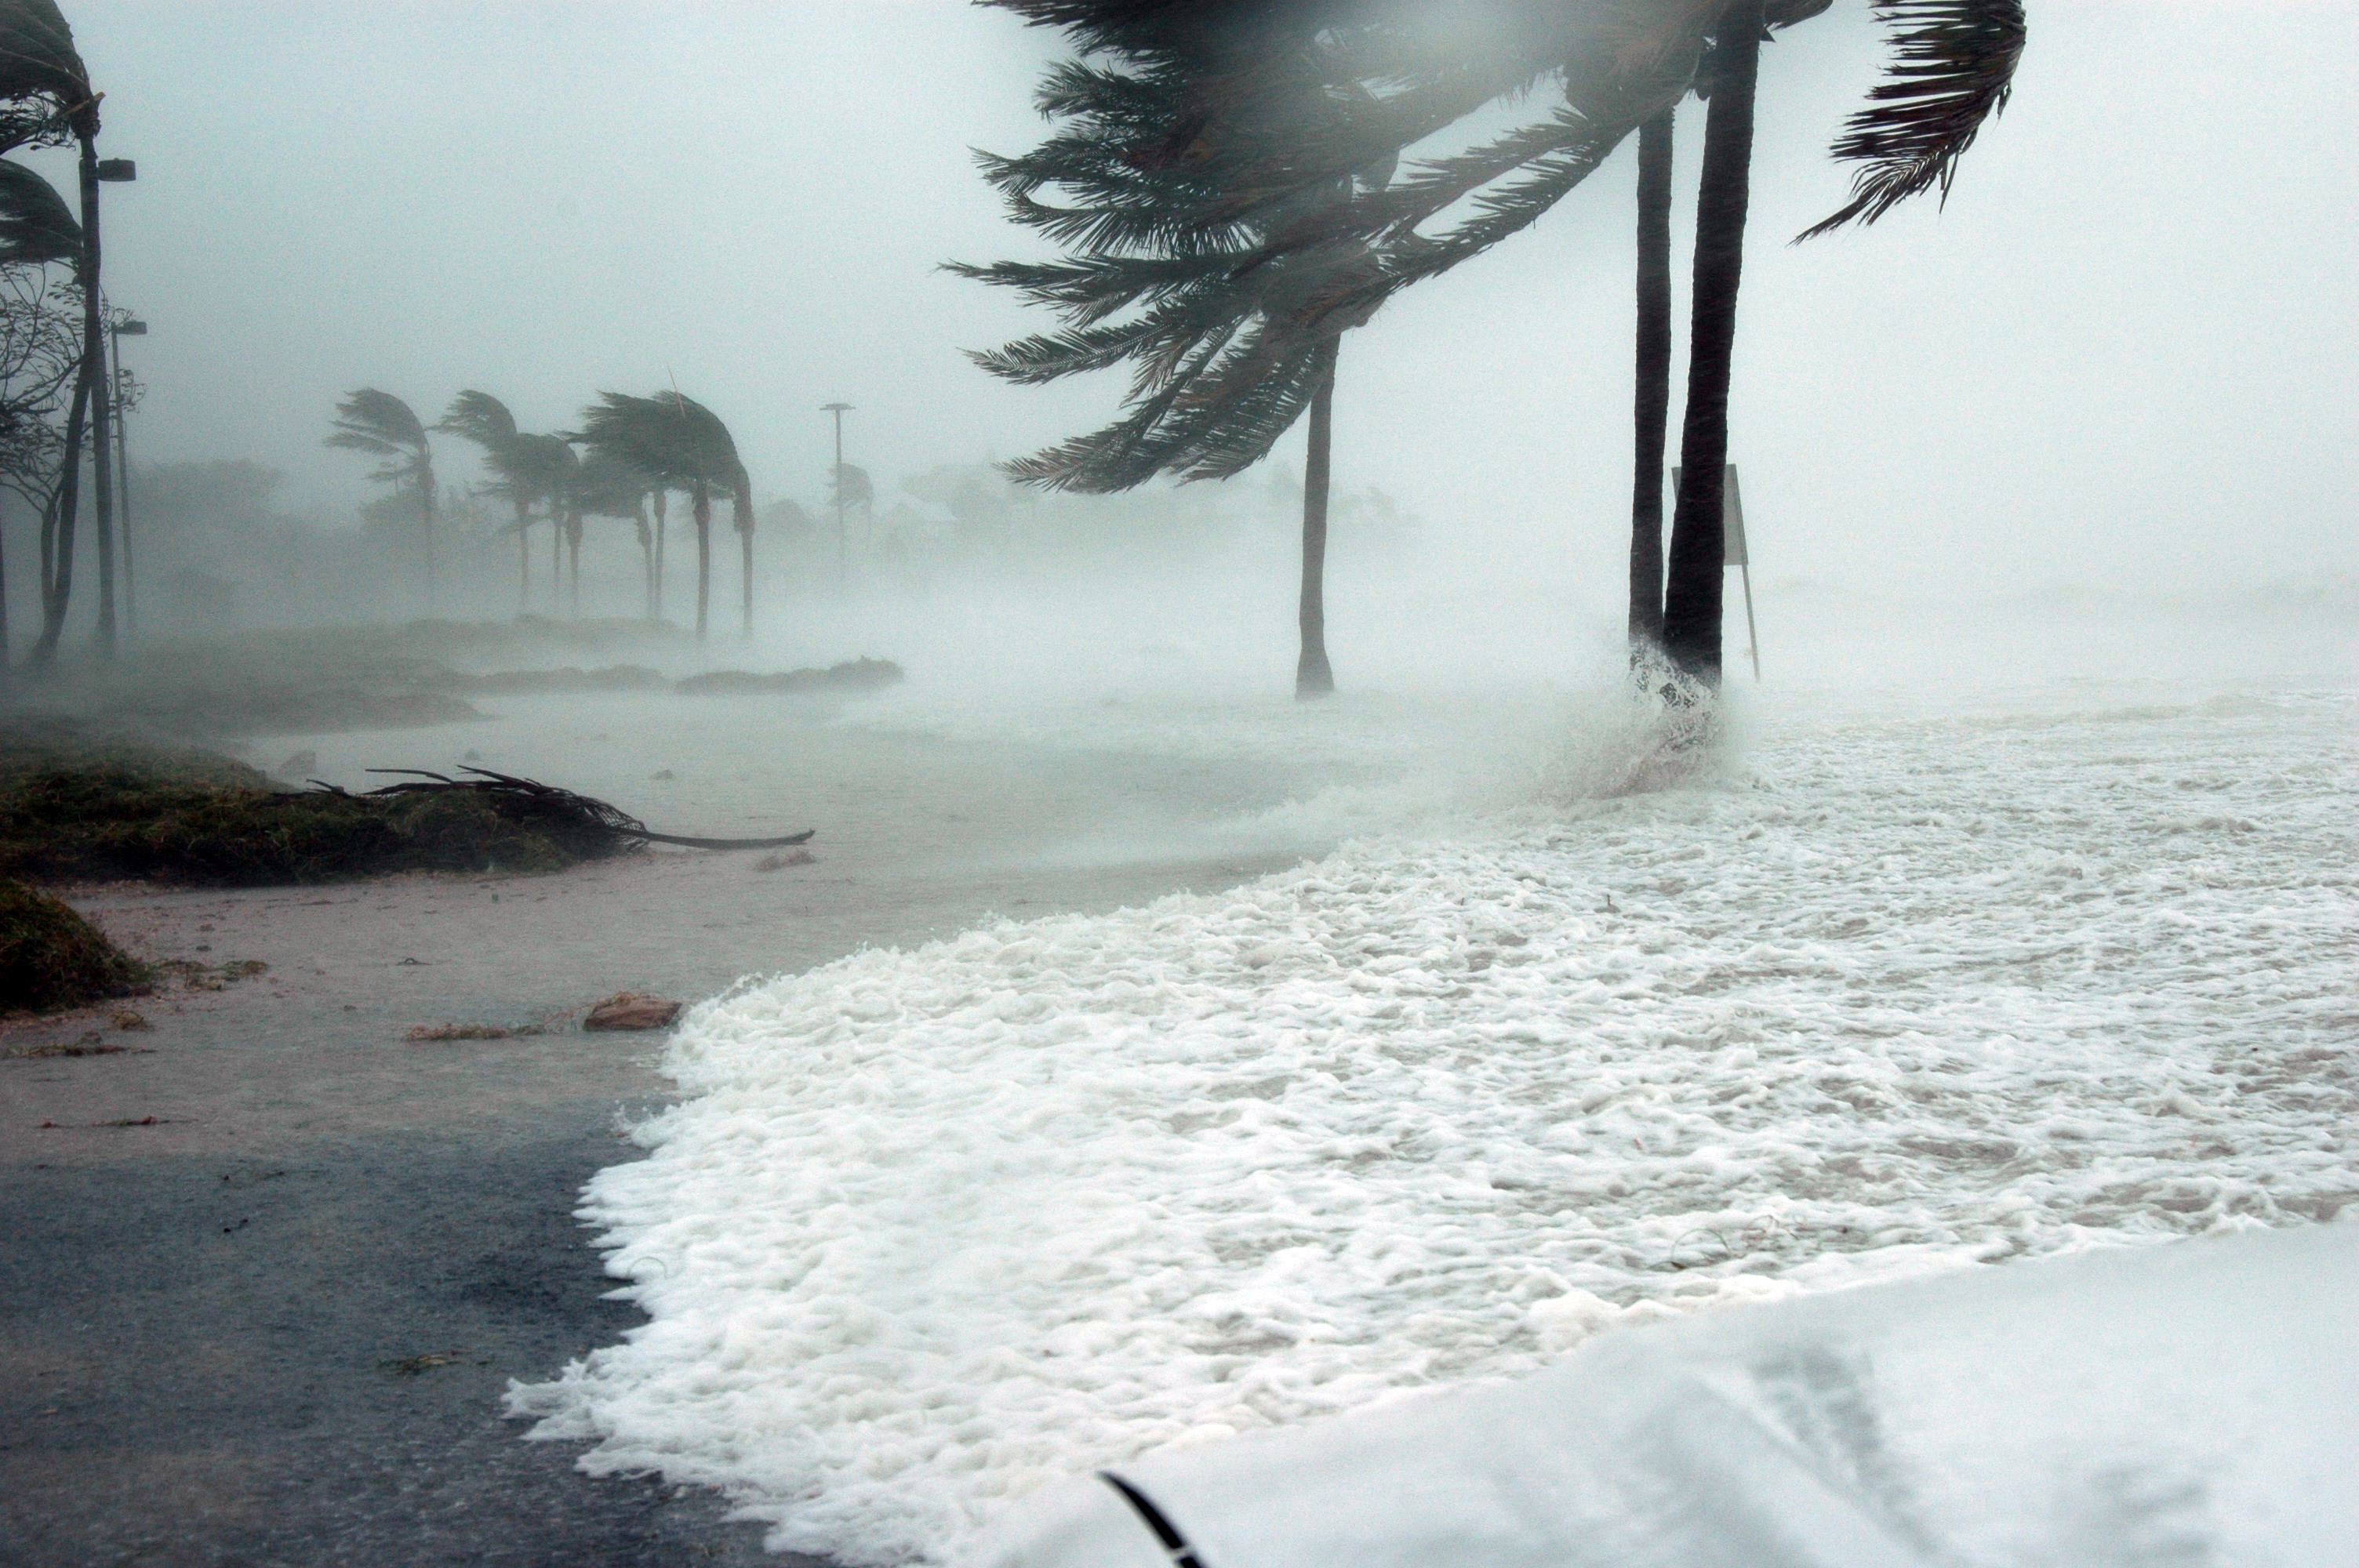 Hurricane making landfall at the Gulf Coast.